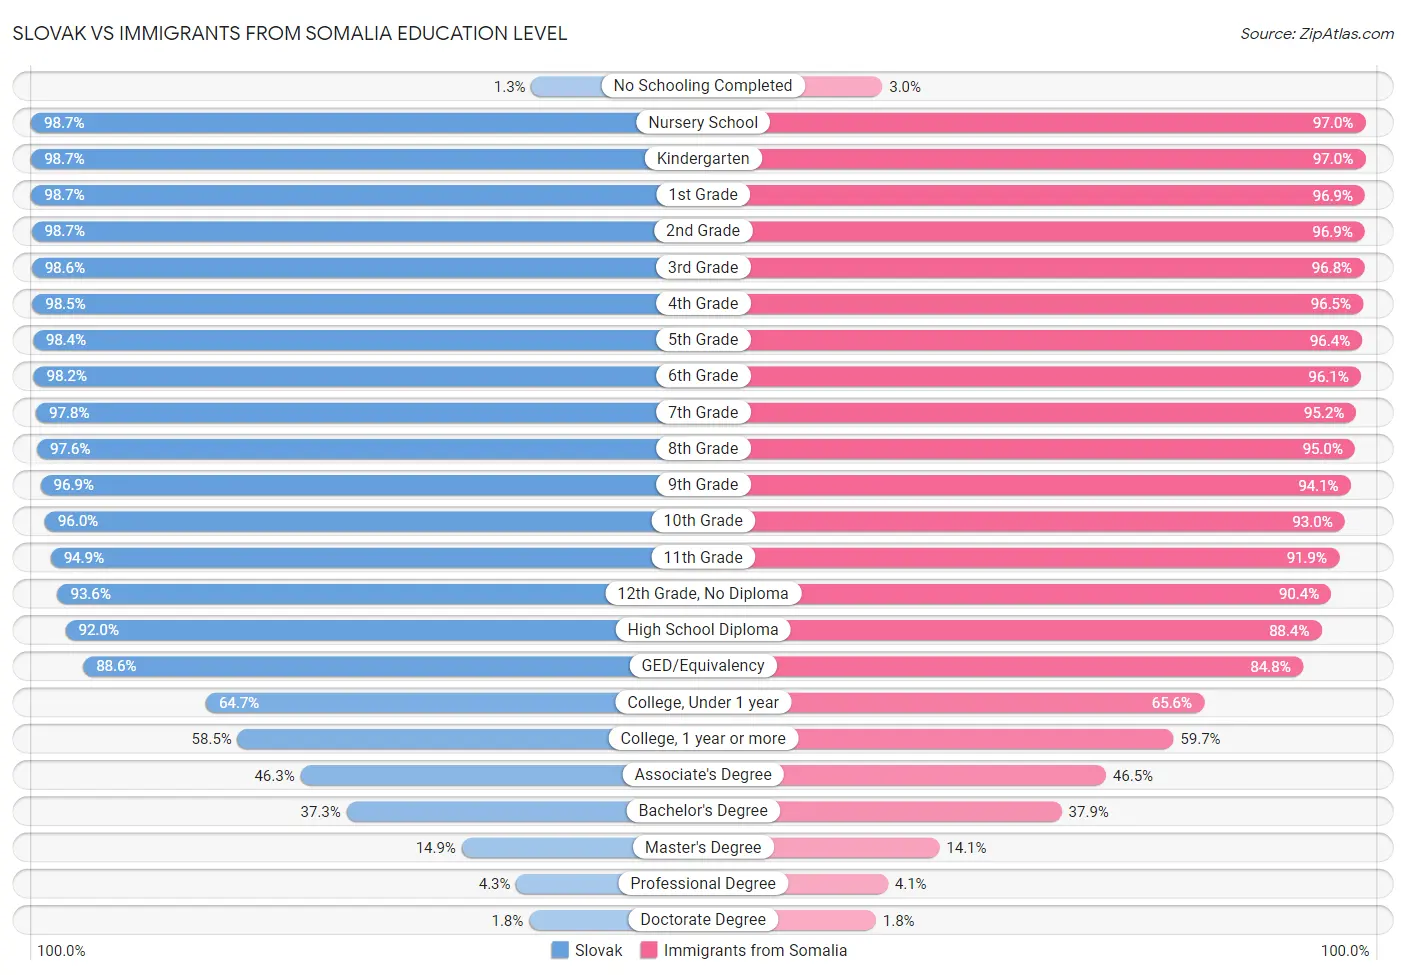 Slovak vs Immigrants from Somalia Education Level